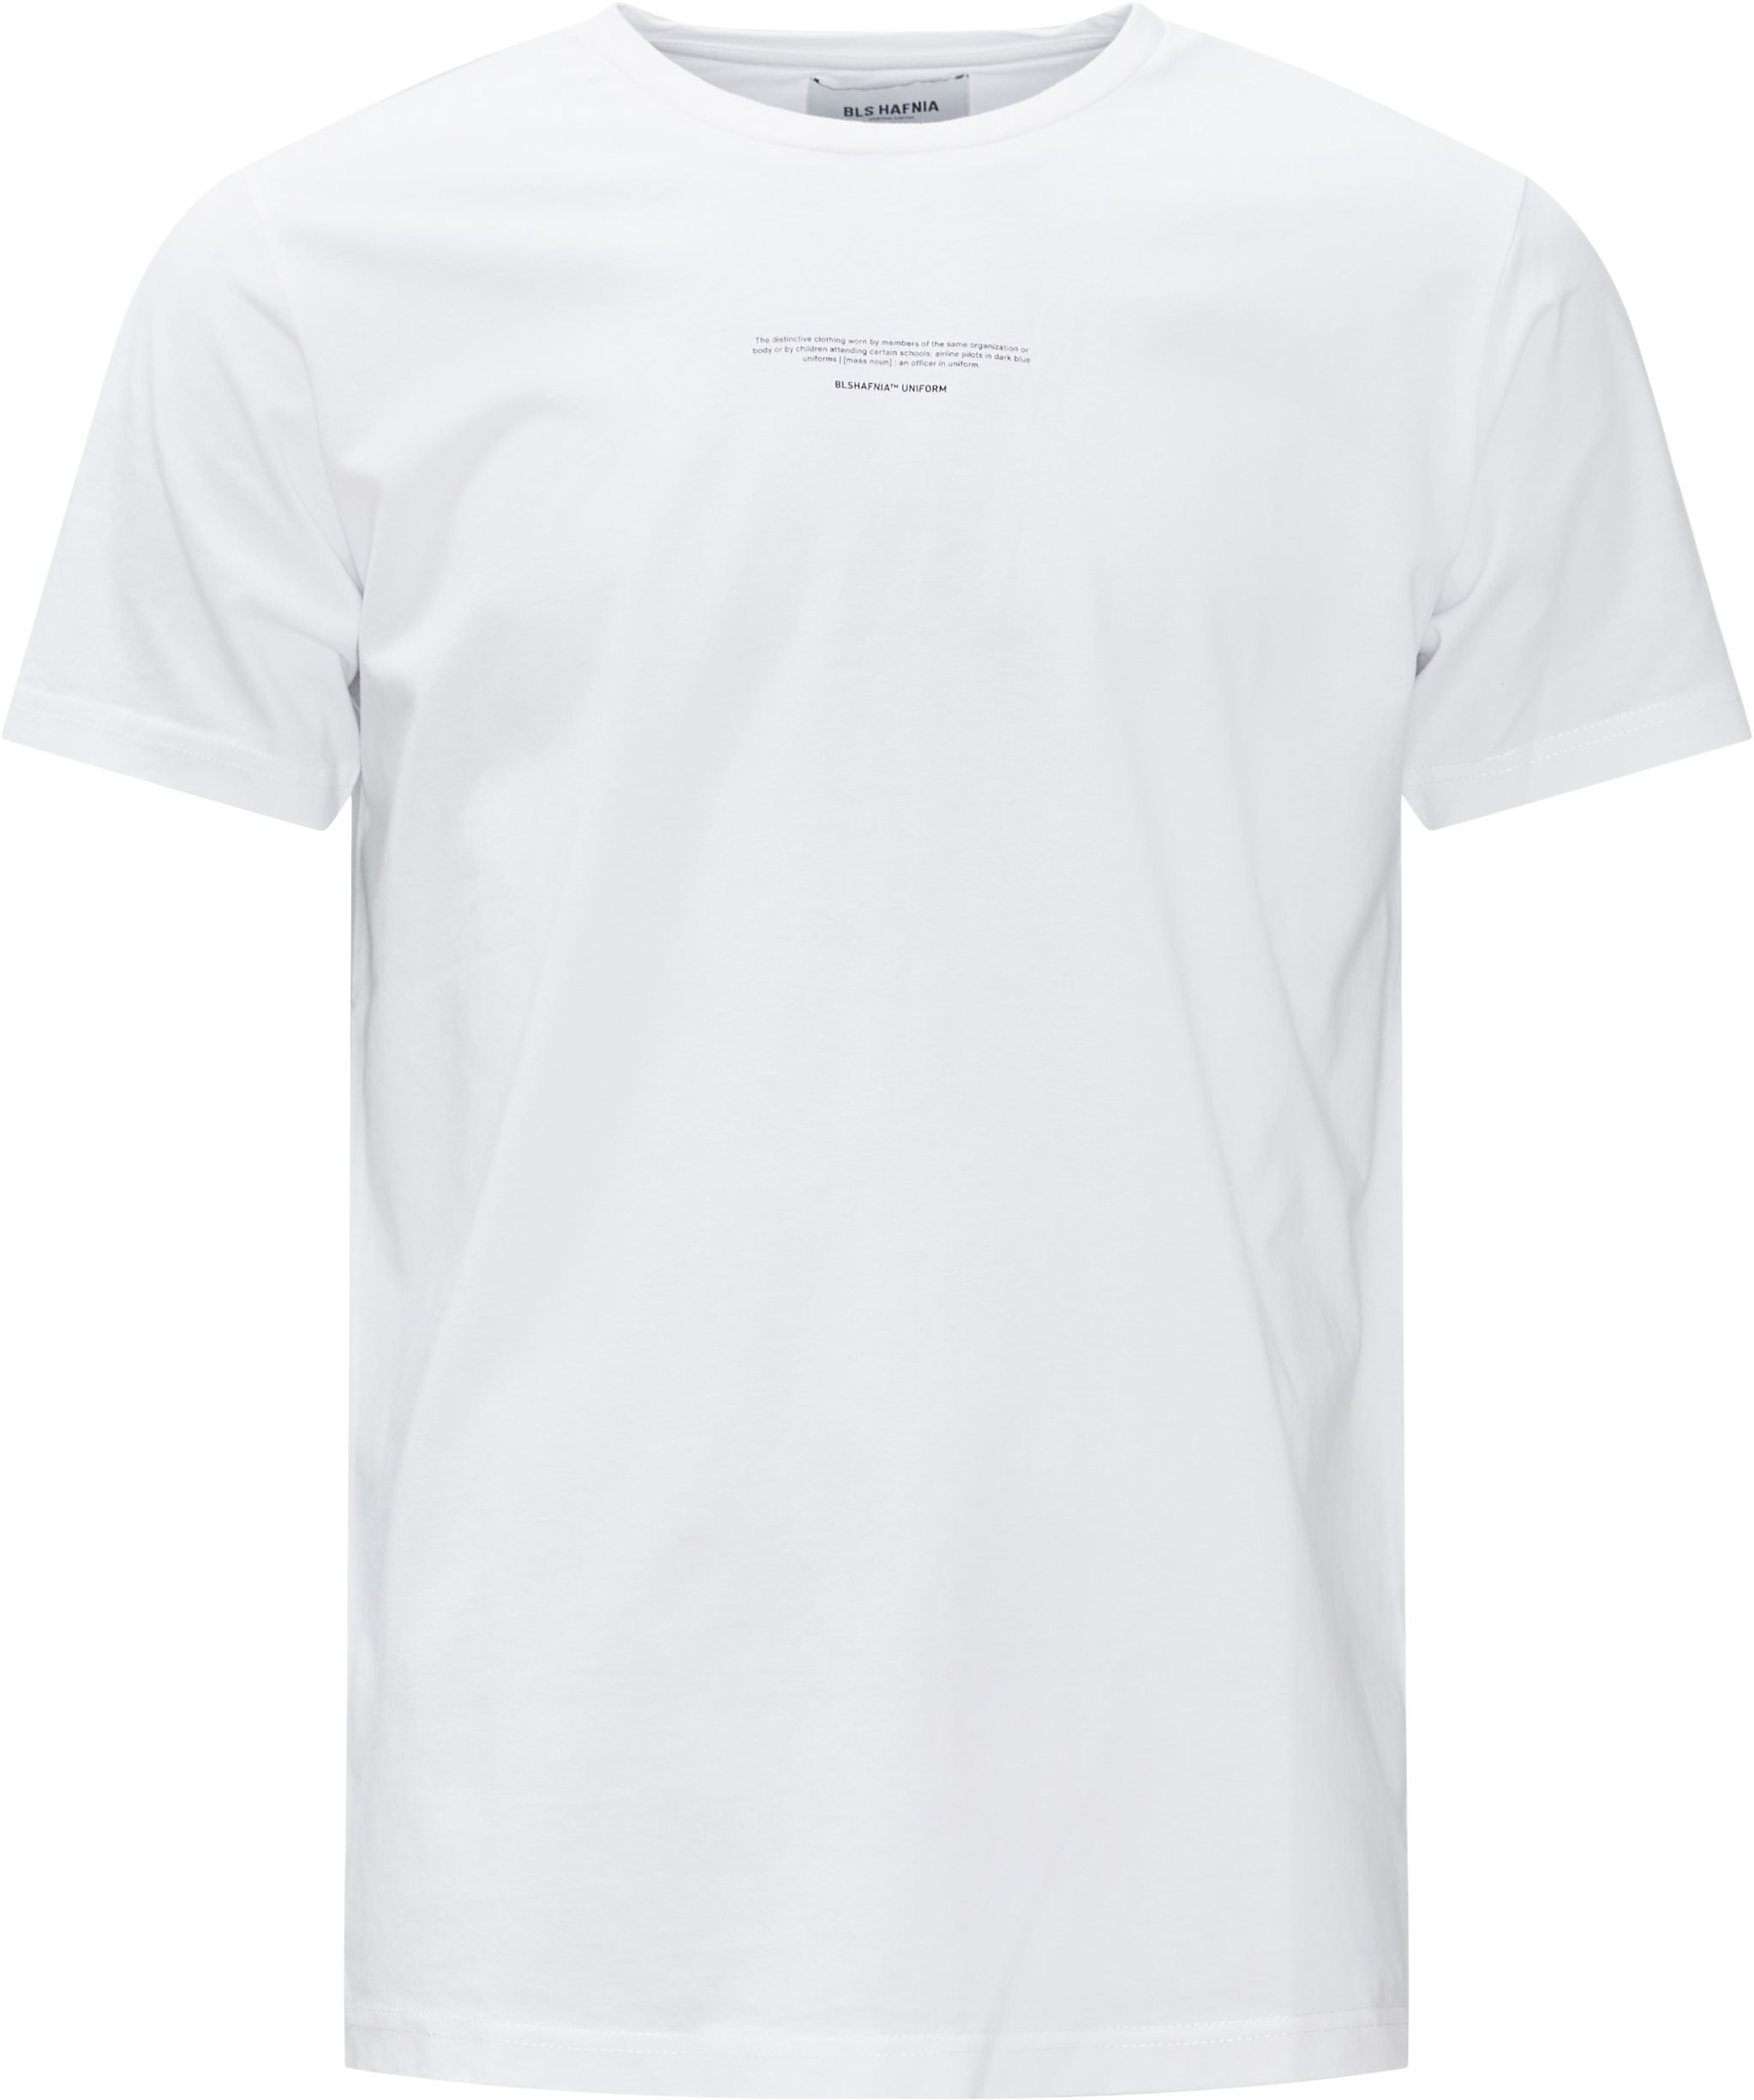 Uniform Tee - T-shirts - Regular fit - White